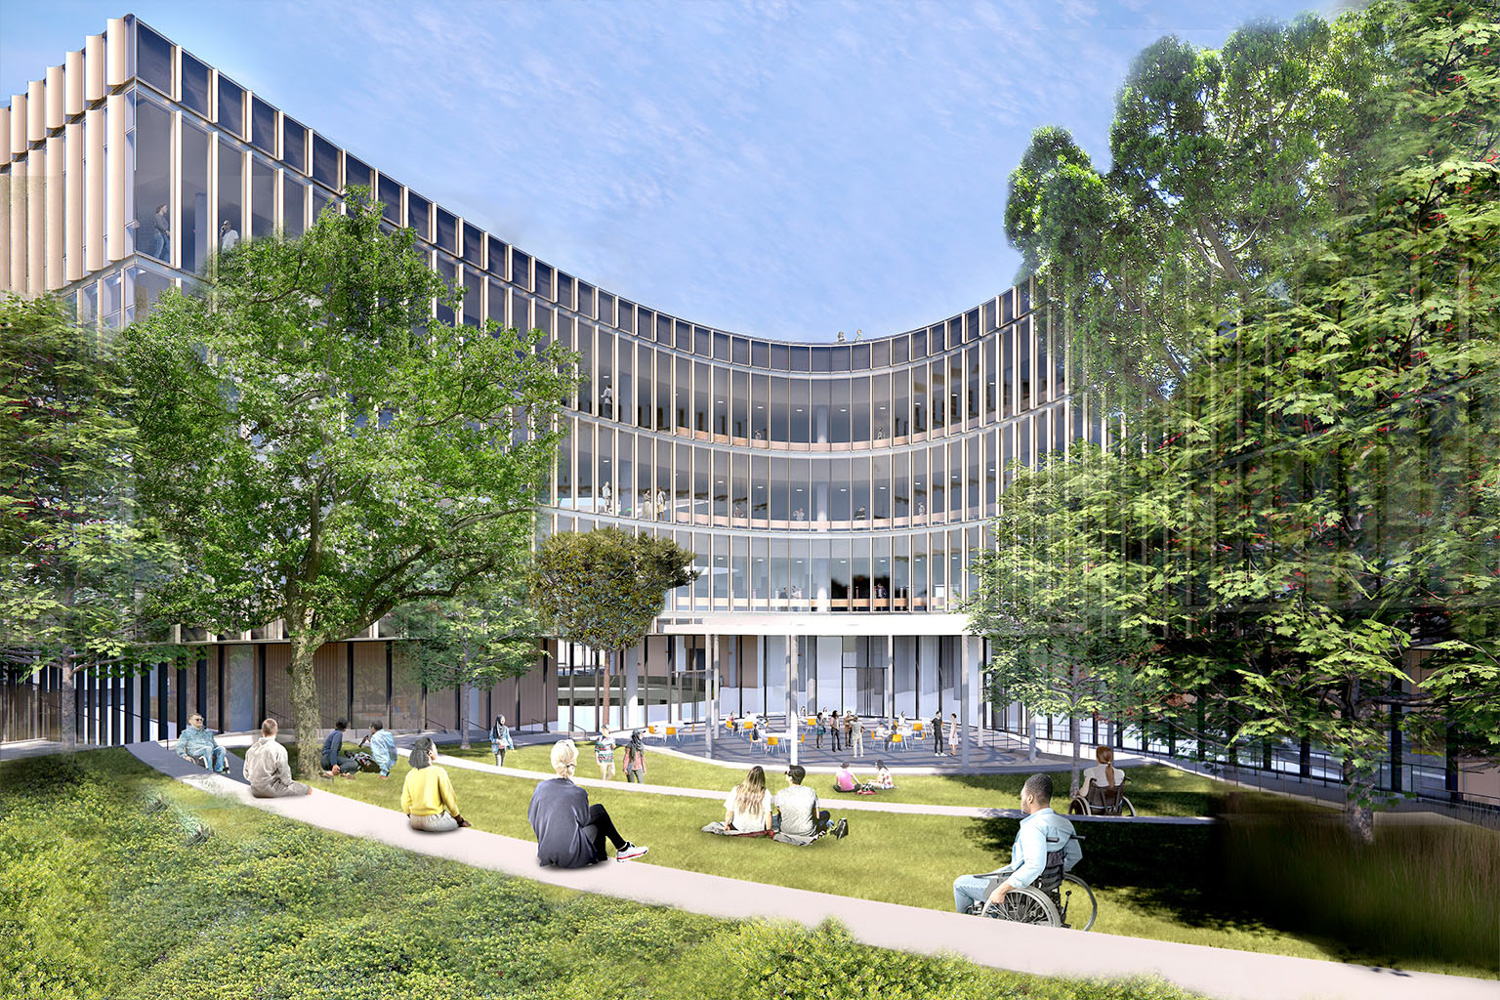 UC Berkeley’s Gateway Building south courtyard, rendering by Weiss Manfredi